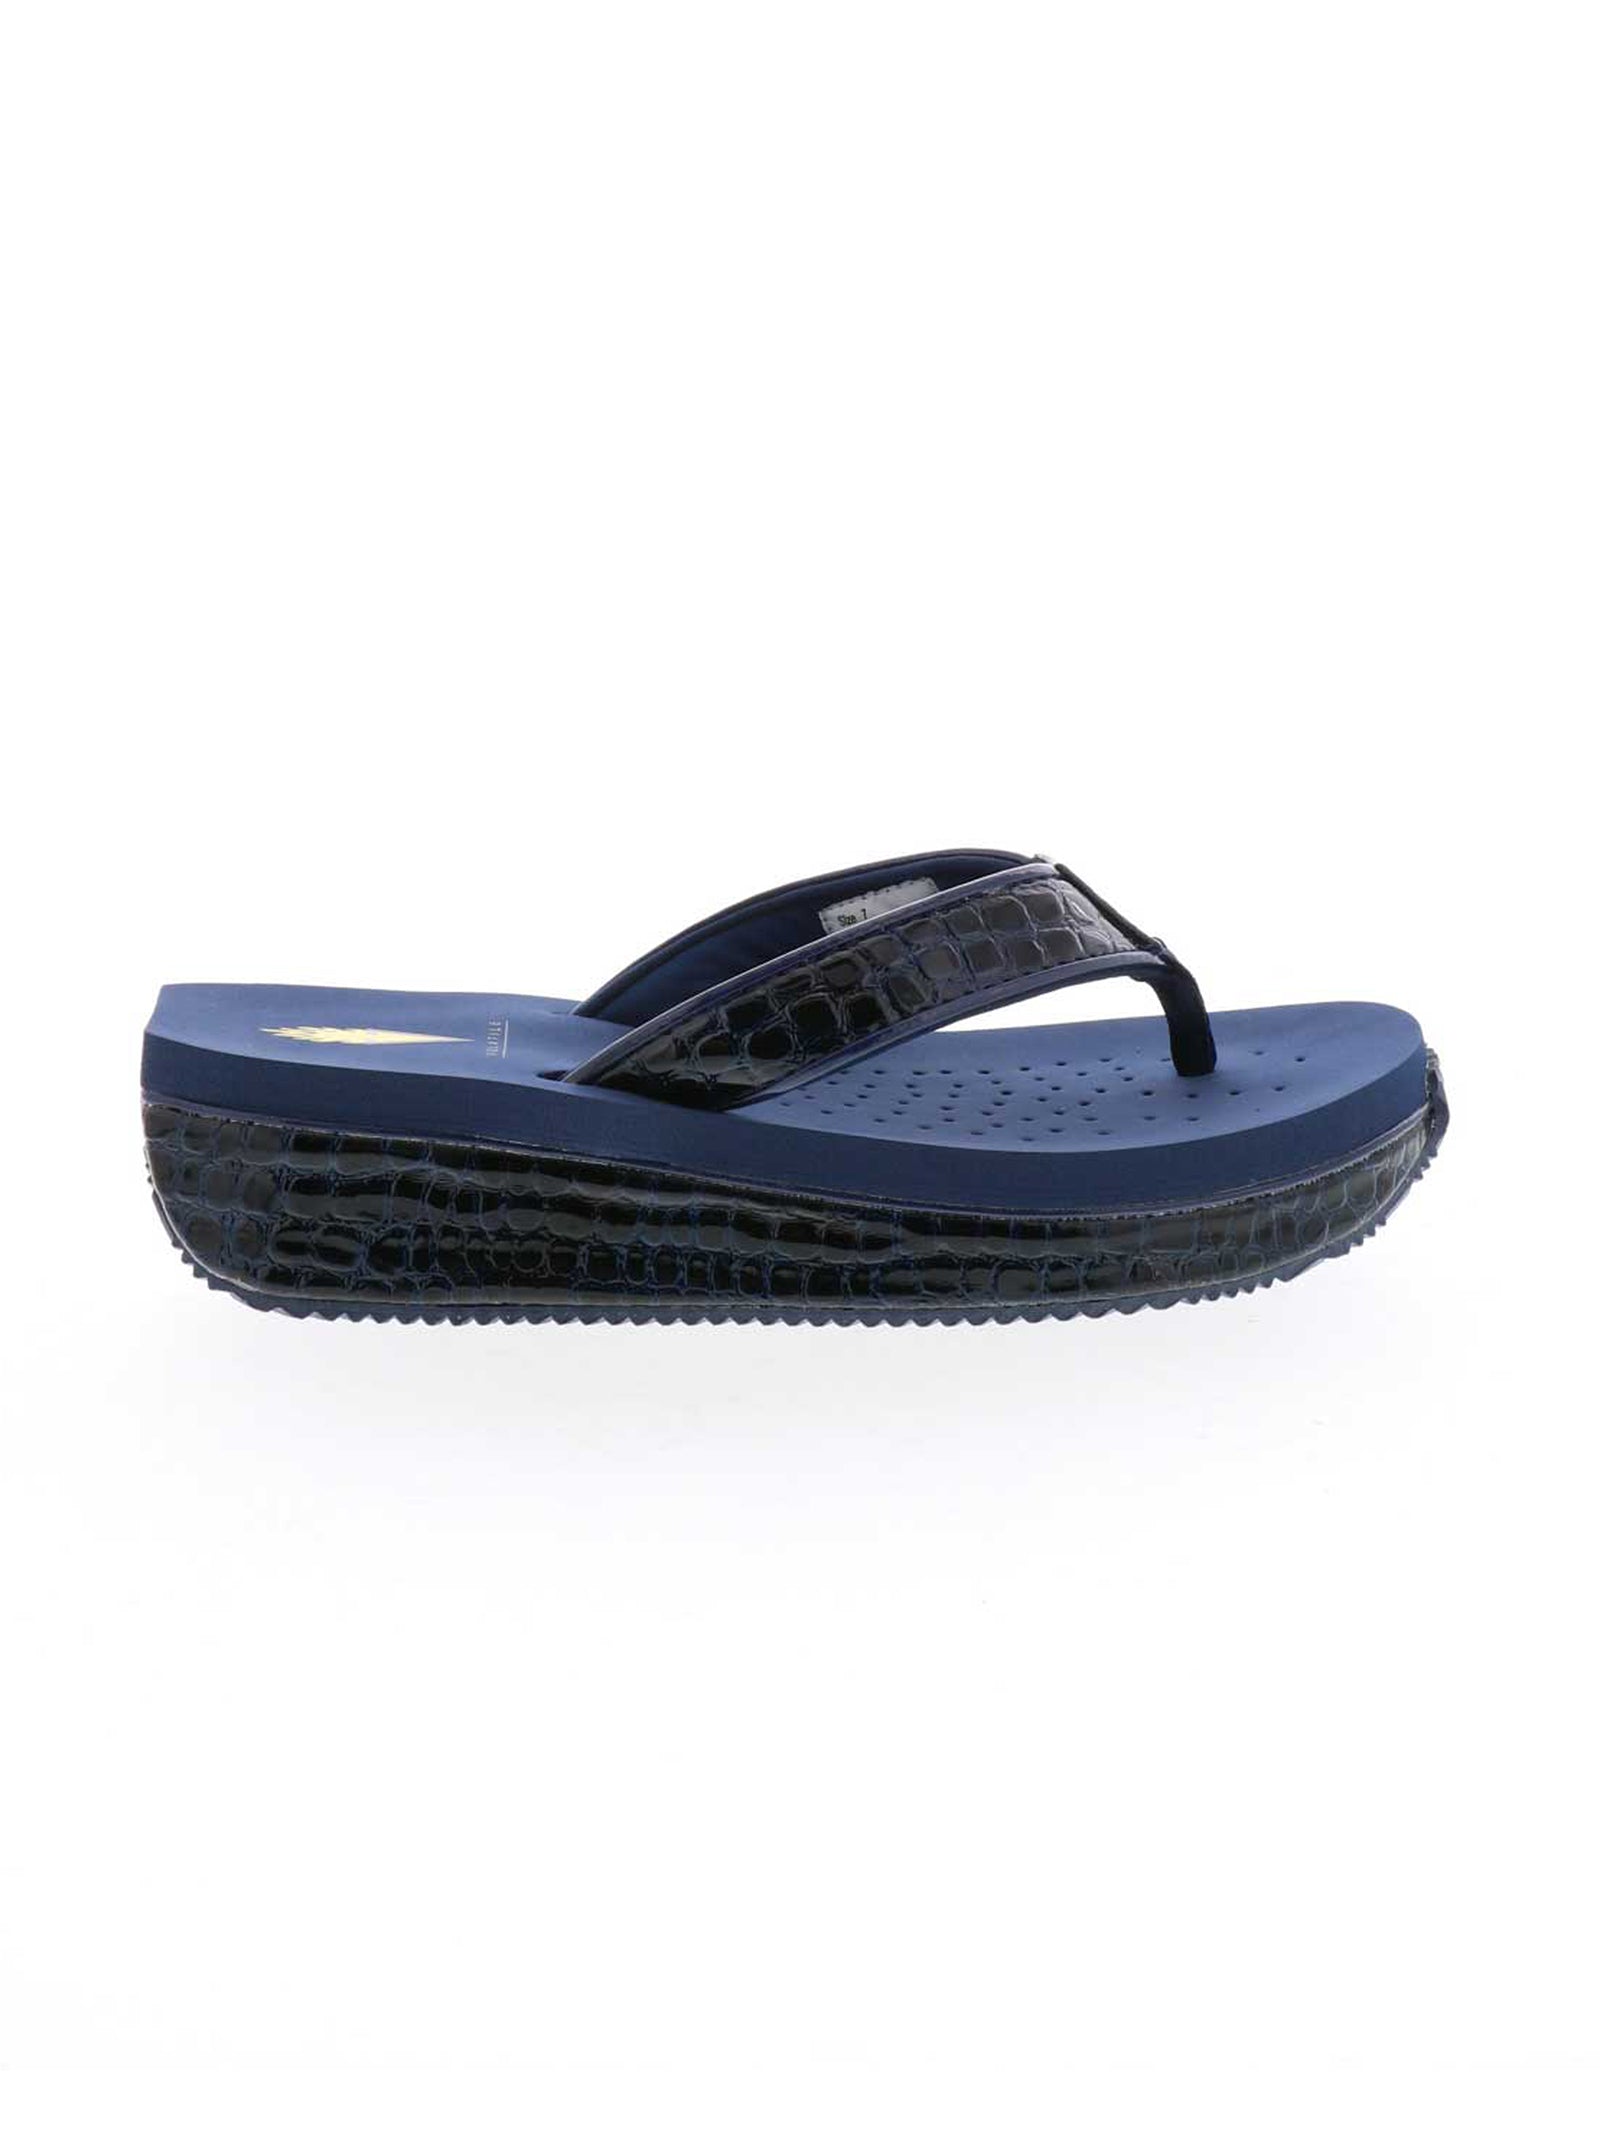 Women's Waterproof Orthotic Sandals | Orthofeet Lake Blue